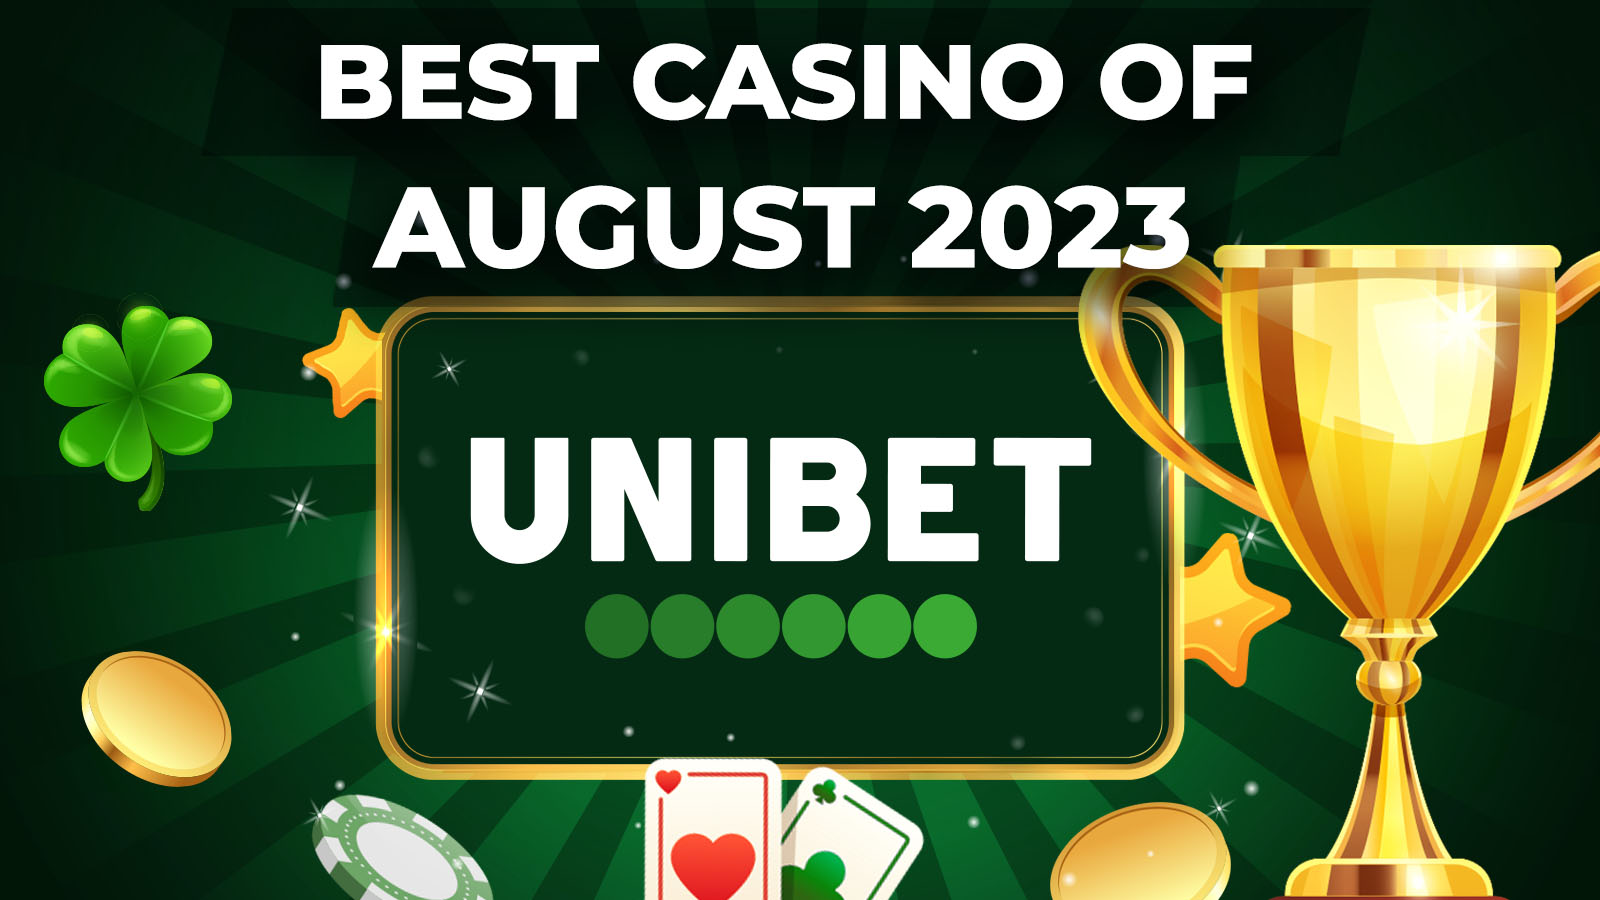 Unibet - the Best Casino of August 2023